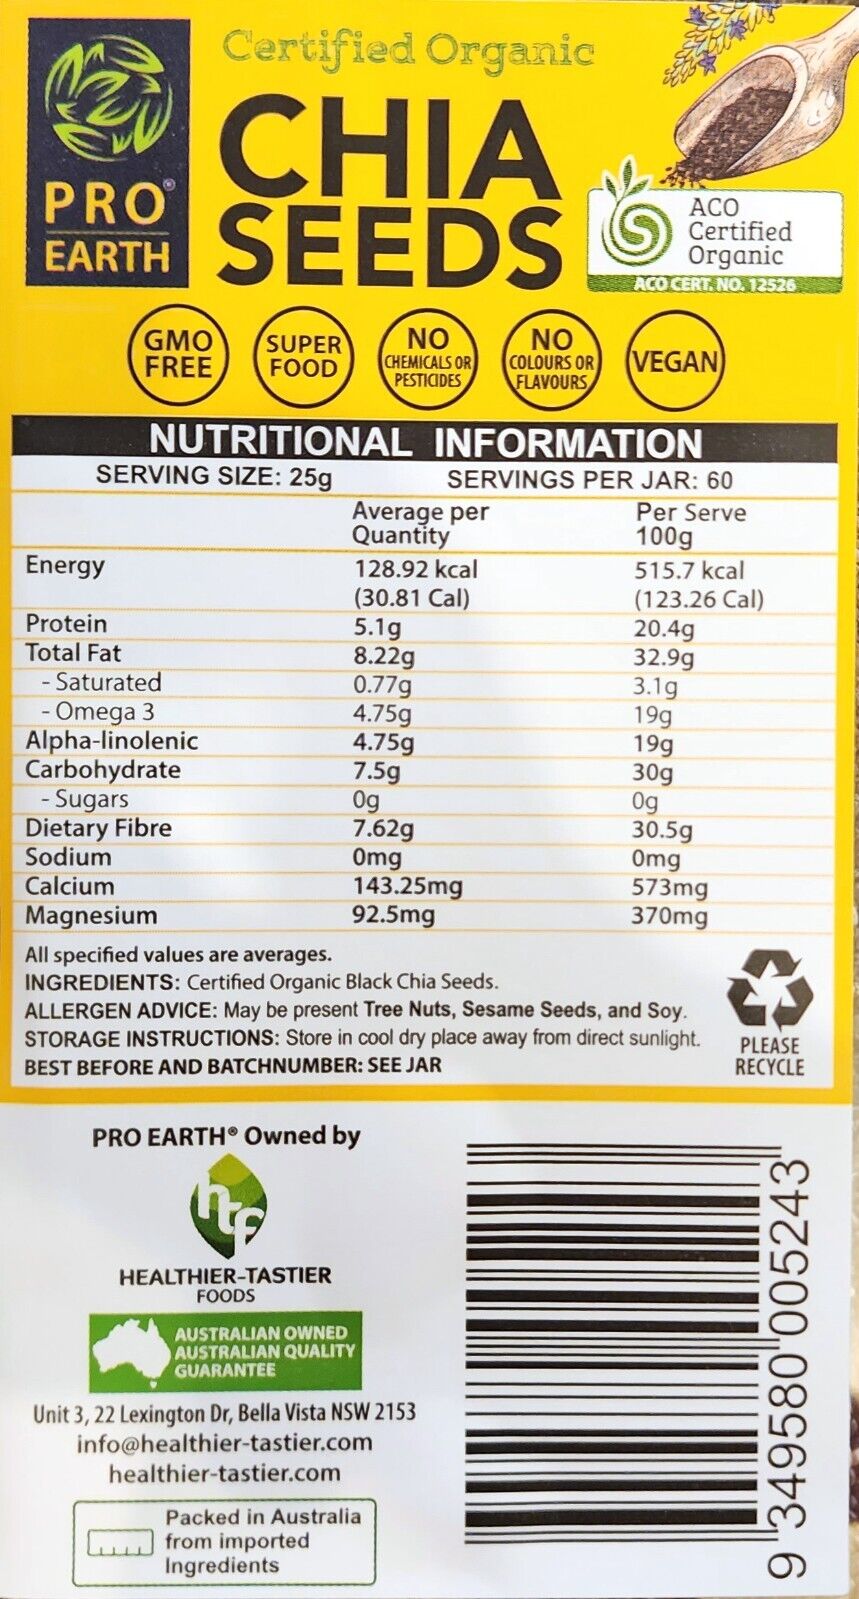 Pro Earth Chia Seeds Organic Super Food 1.5kg